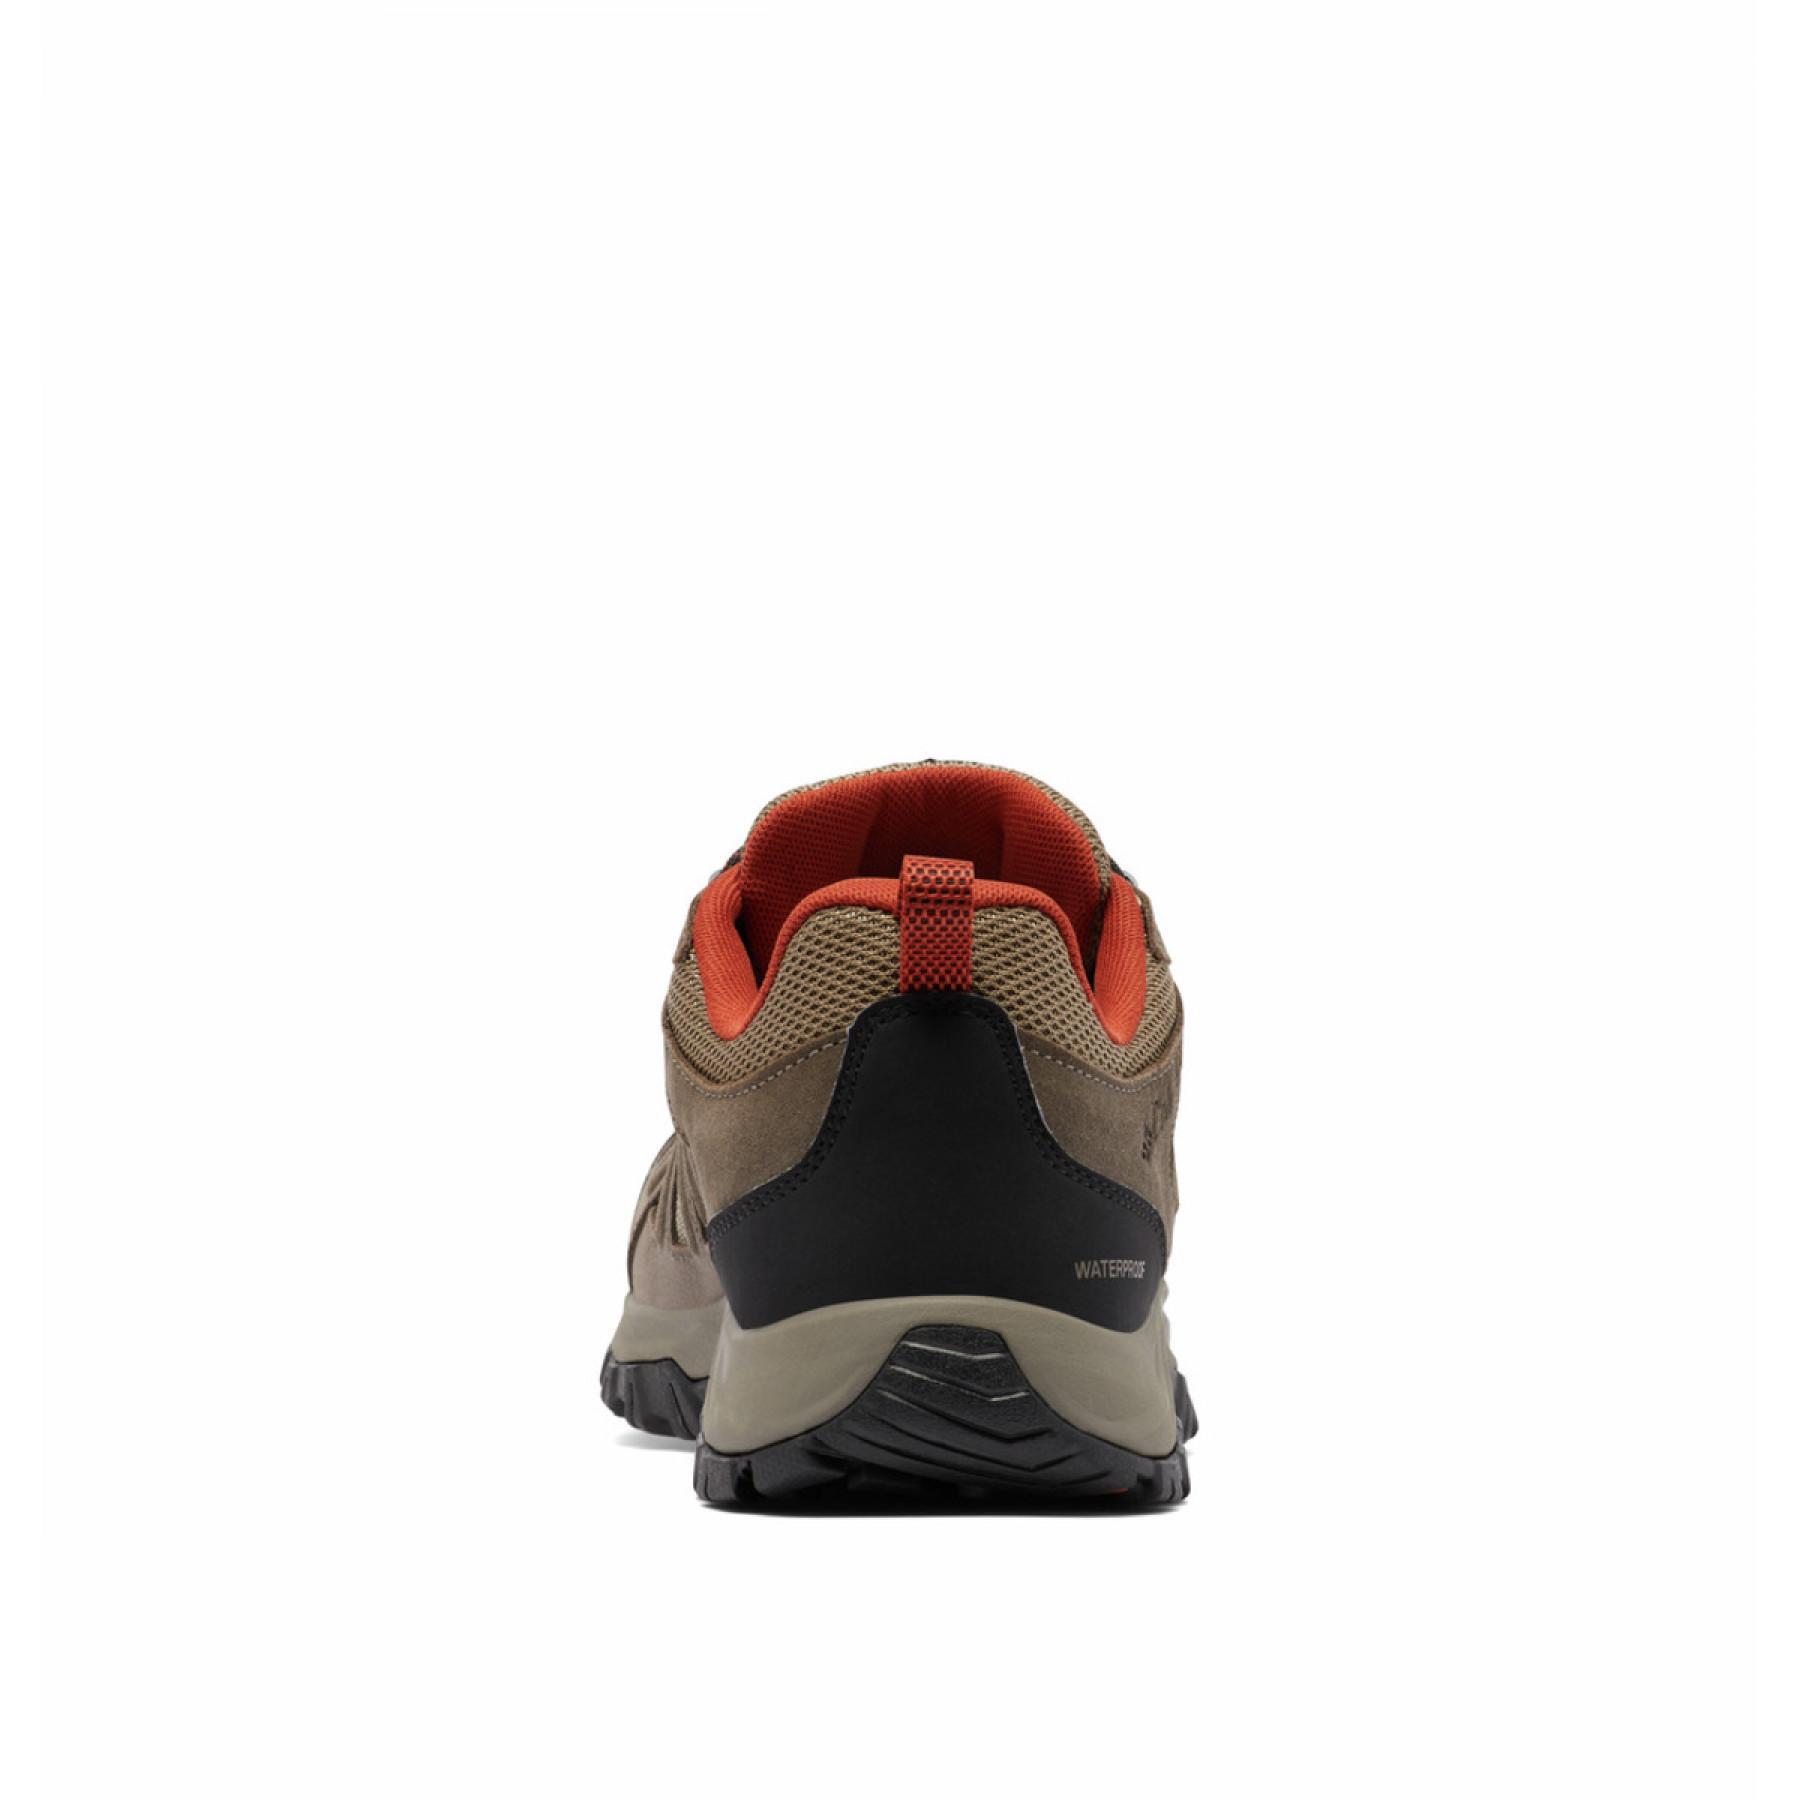 Chaussures de randonnée imperméables Columbia Redmond III